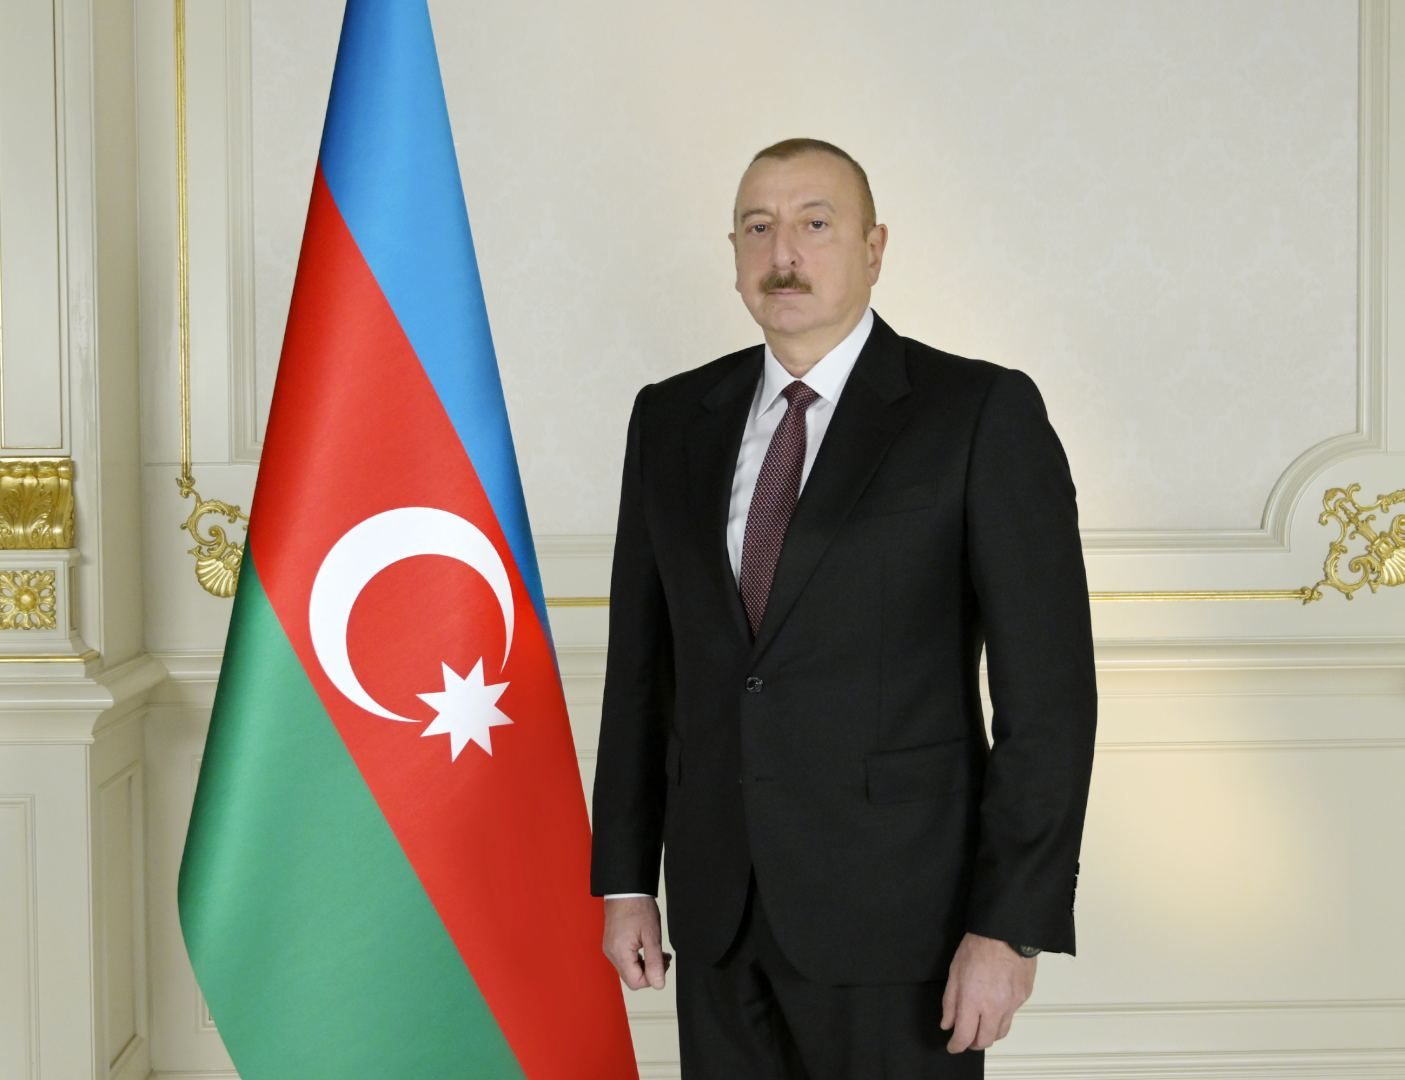 Georgian Prime Minister congratulates President Ilham Aliyev